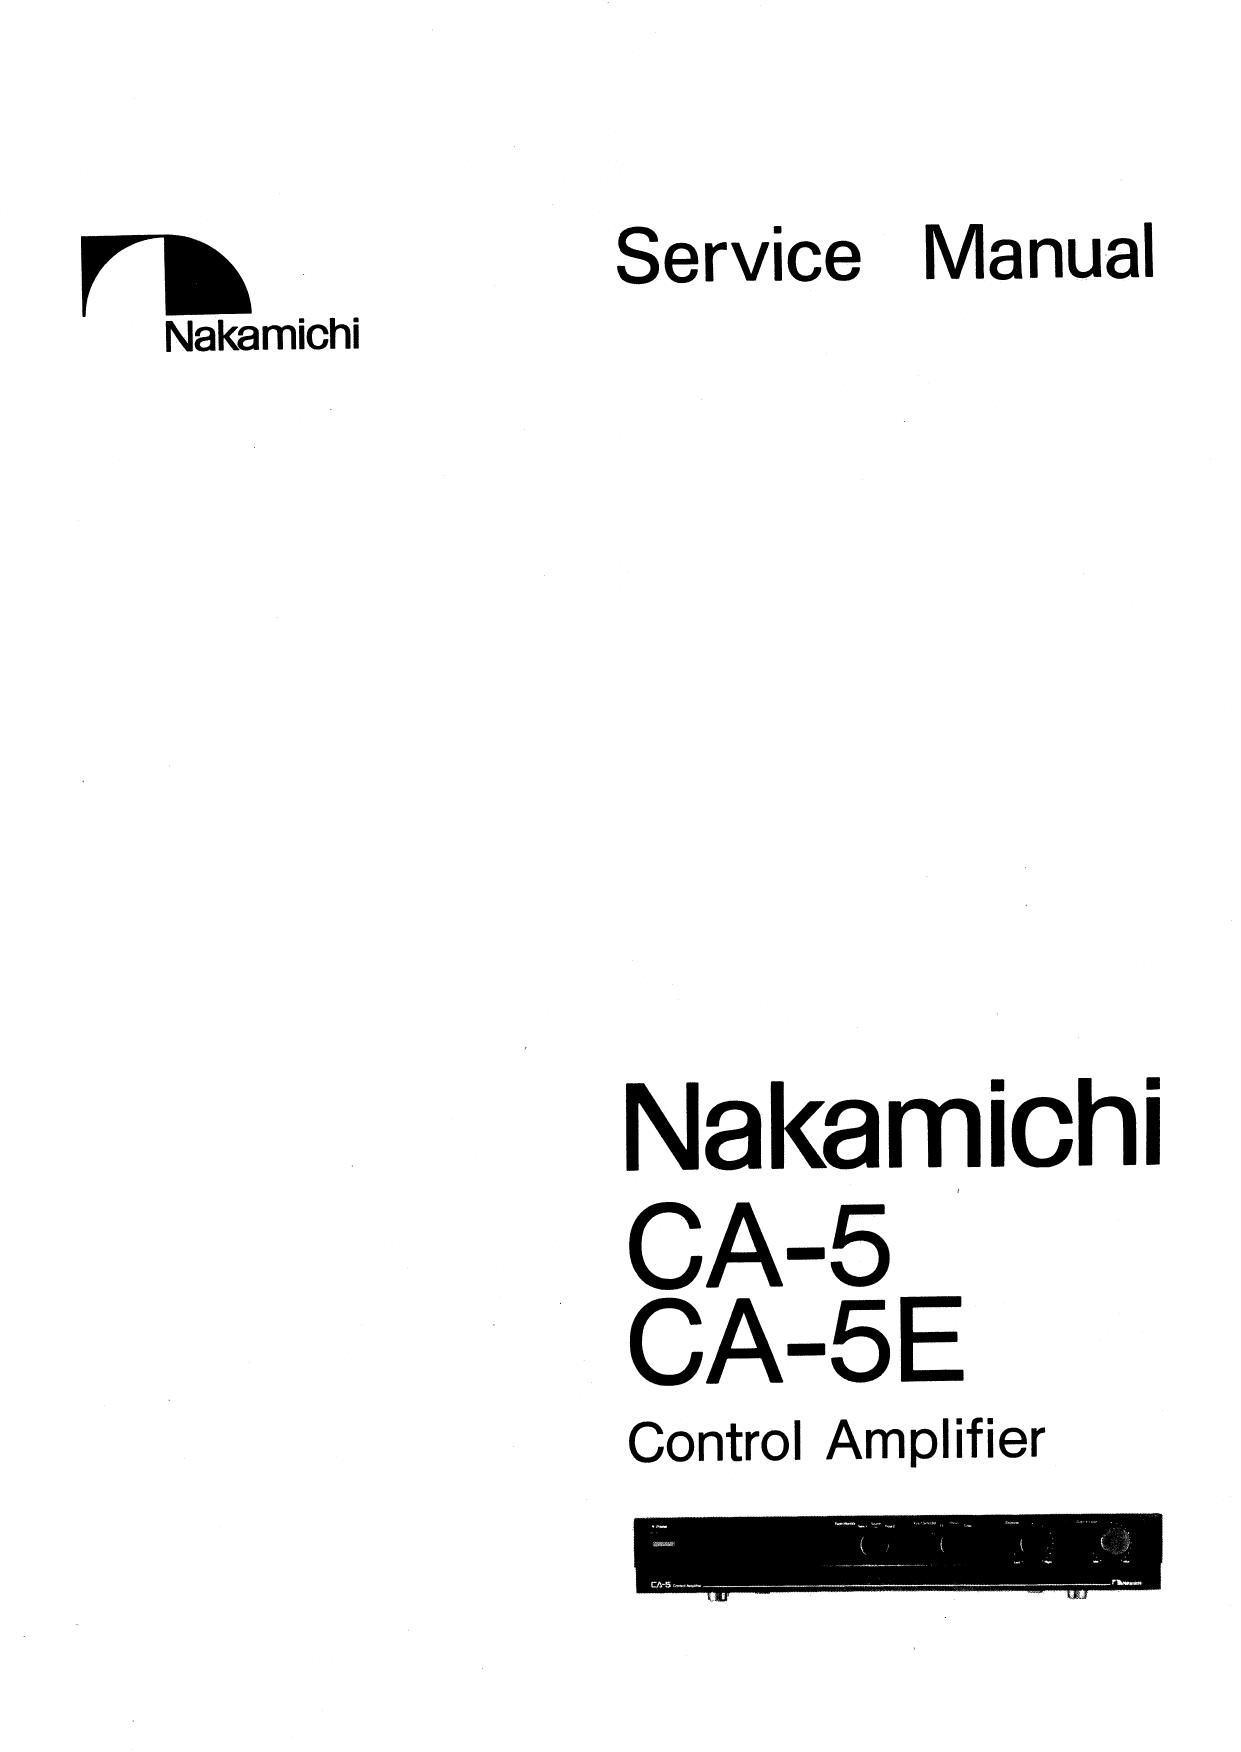 Nakamichi CA 5E Service Manual